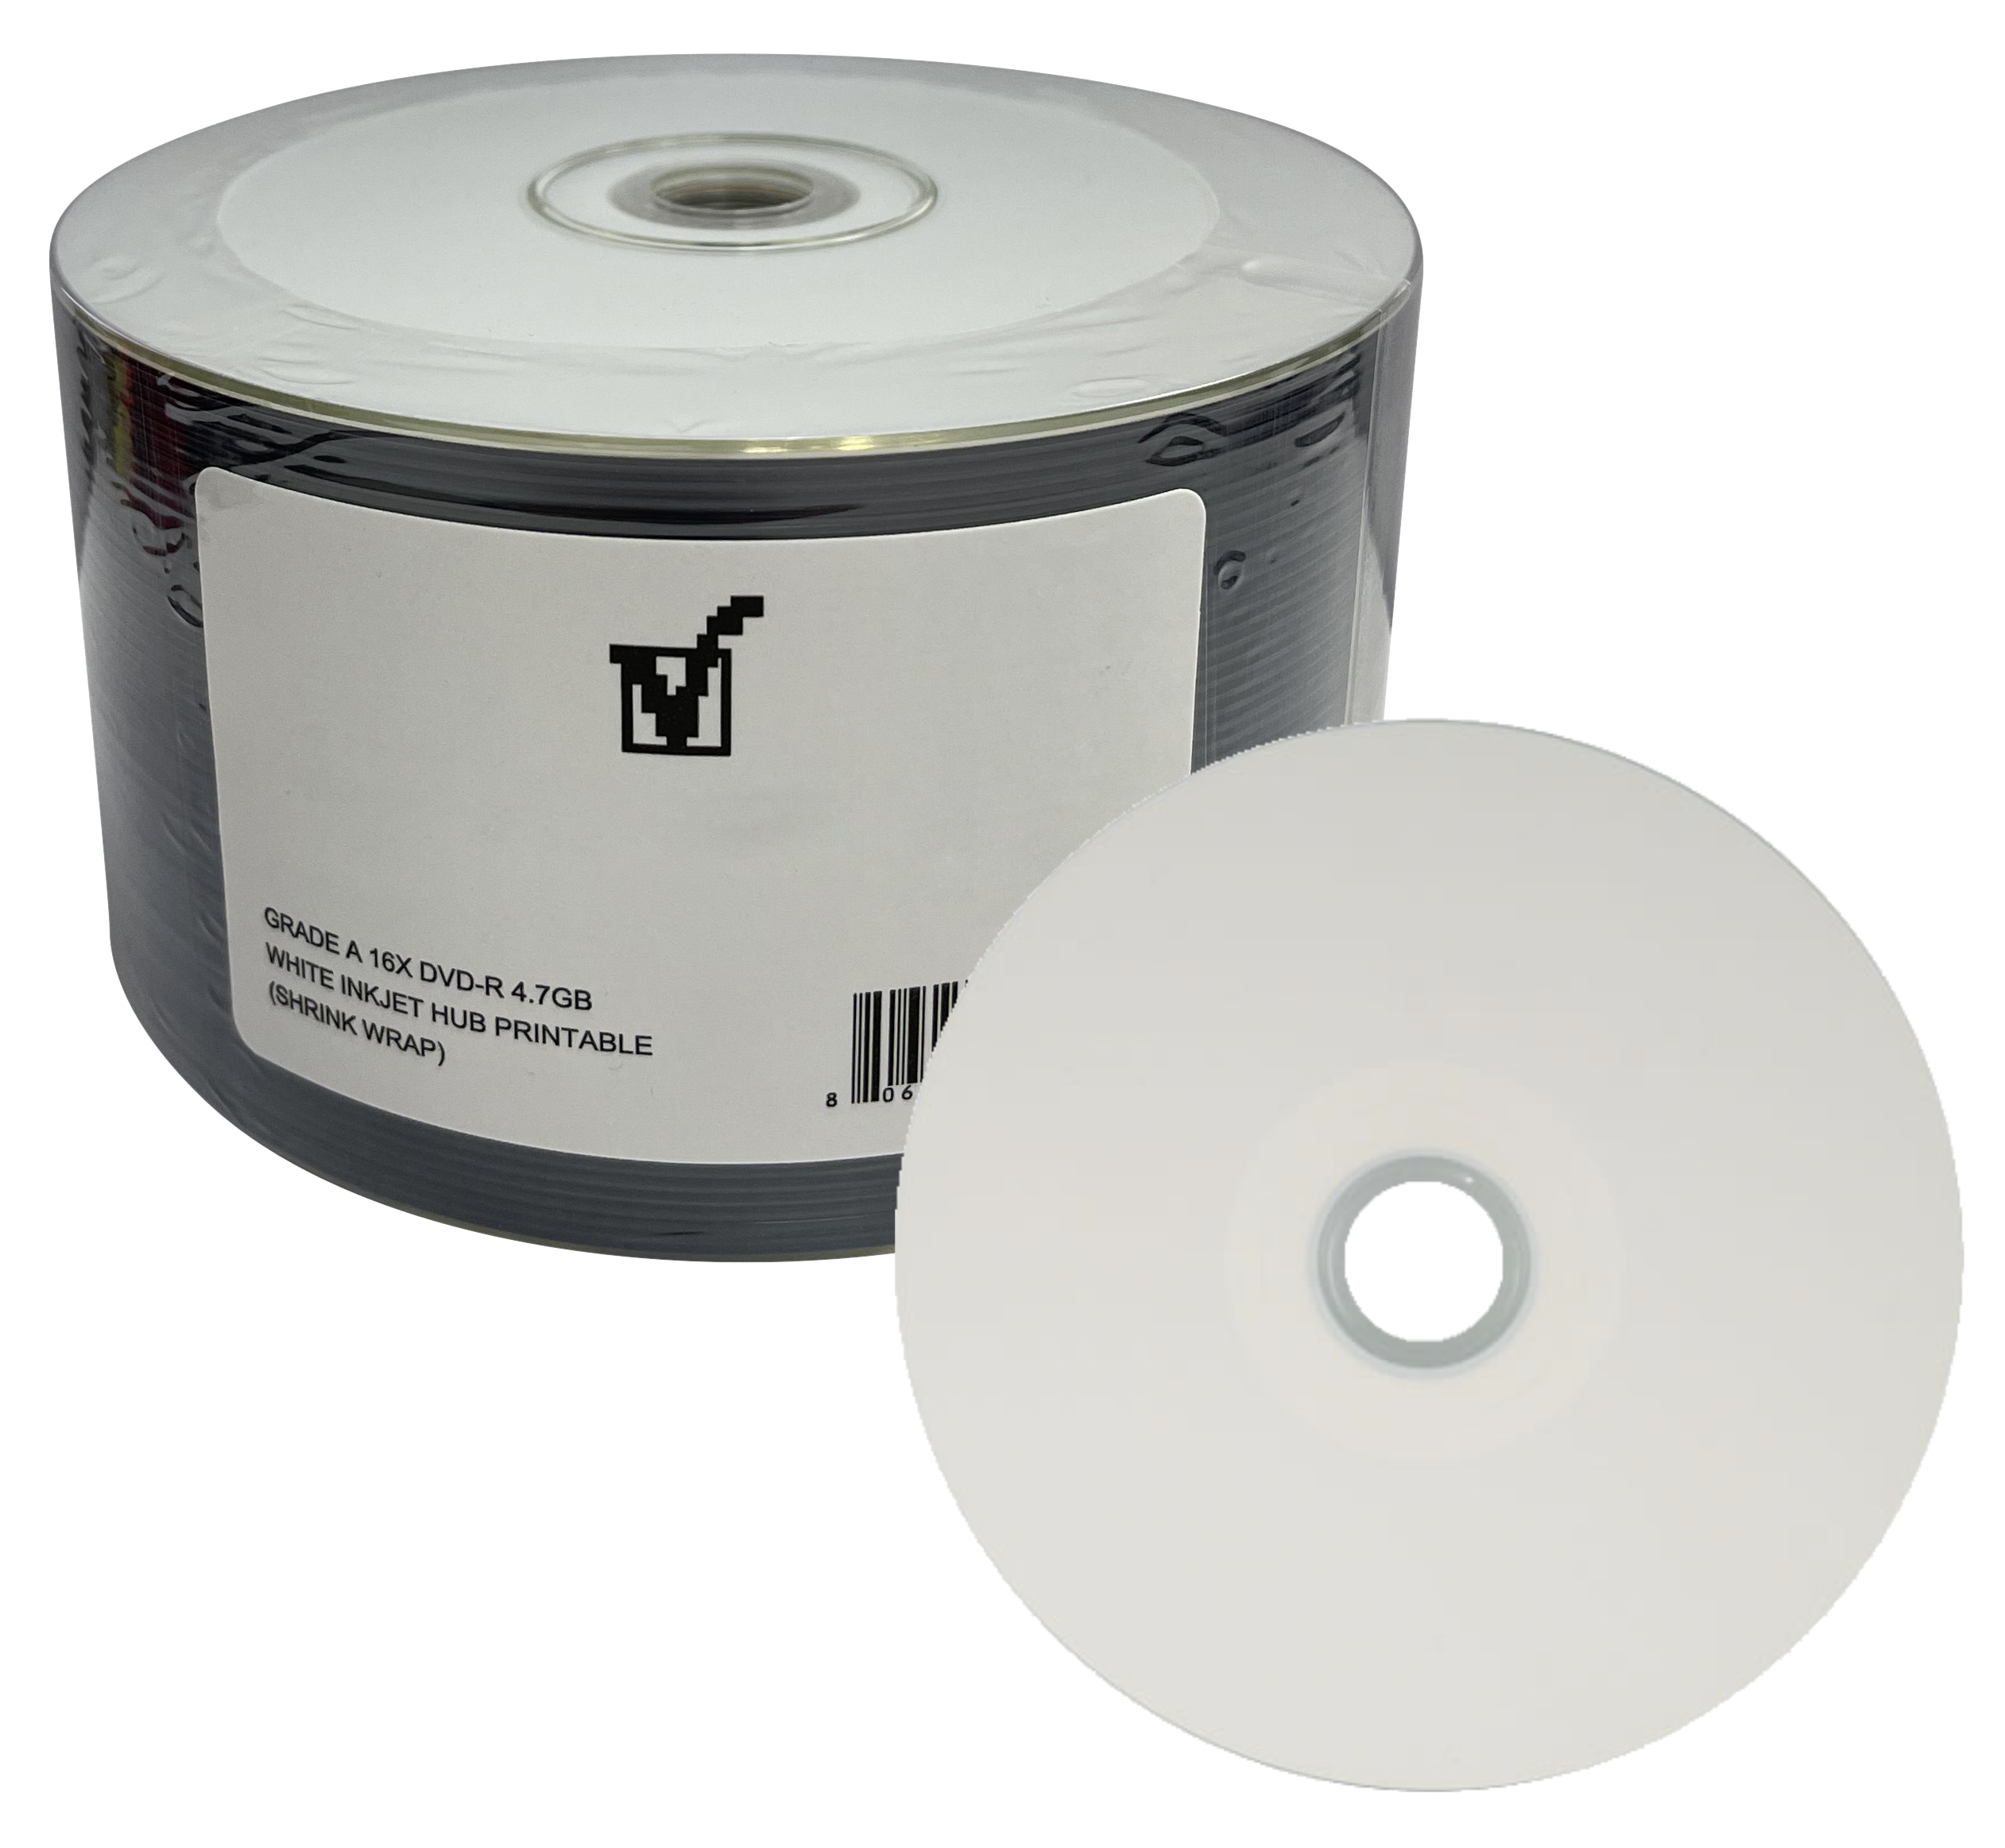 Image of ID 1214261552 600 Grade A 16X DVD-R 47GB White Inkjet Hub Printable (Shrink Wrap)